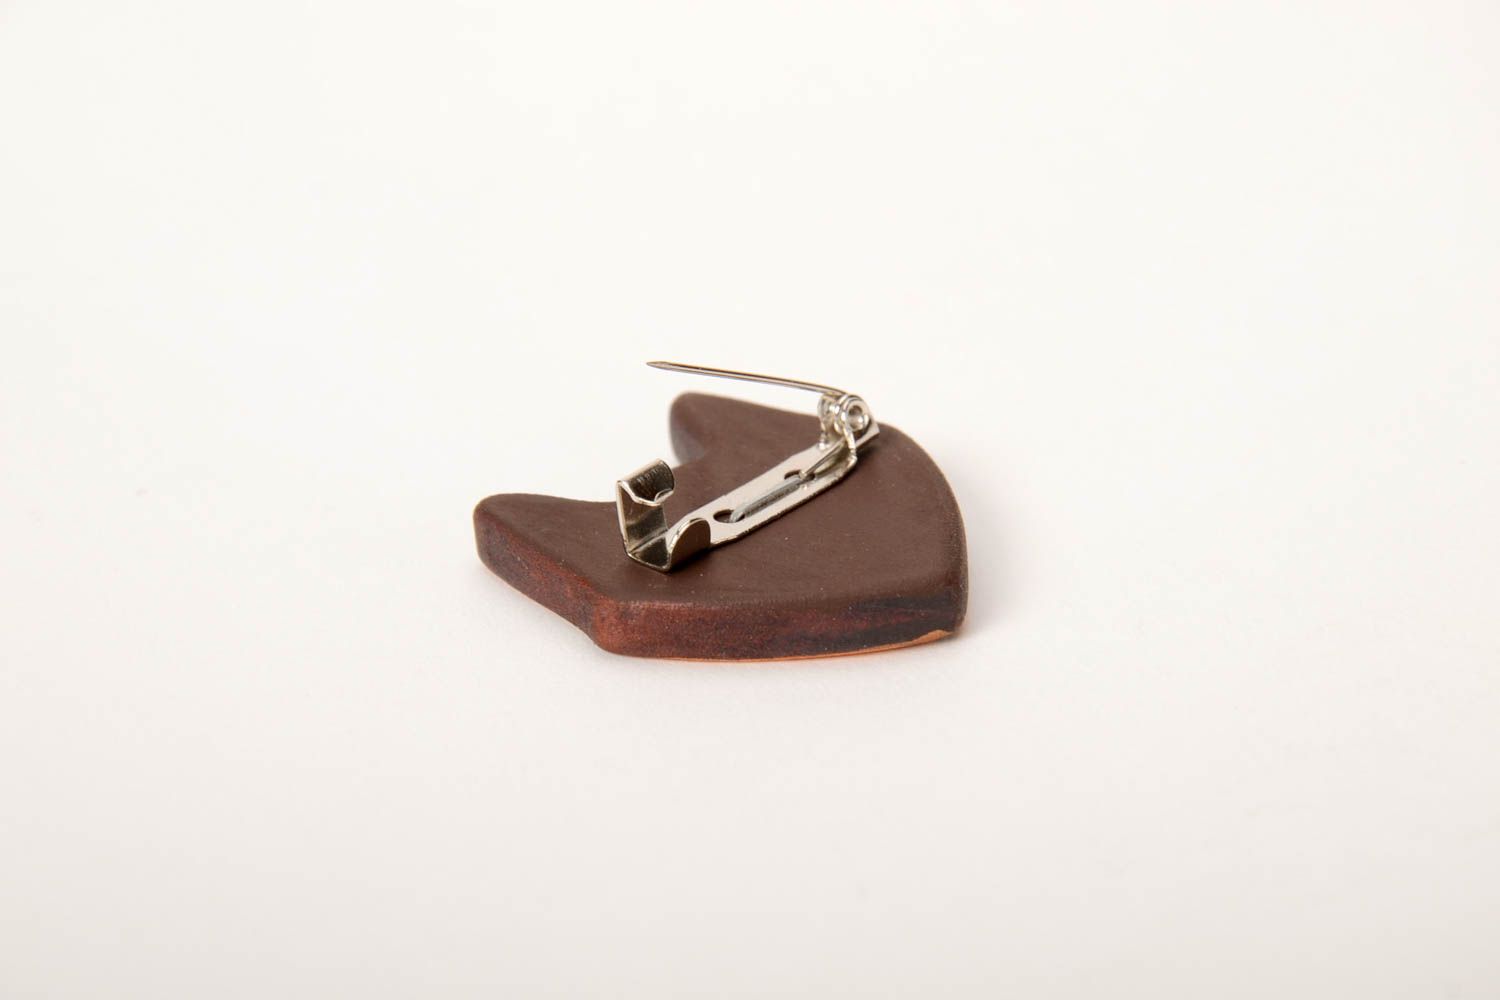 Handmade brooch designer jewelry unusual accessory wooden brooch gift ideas photo 3